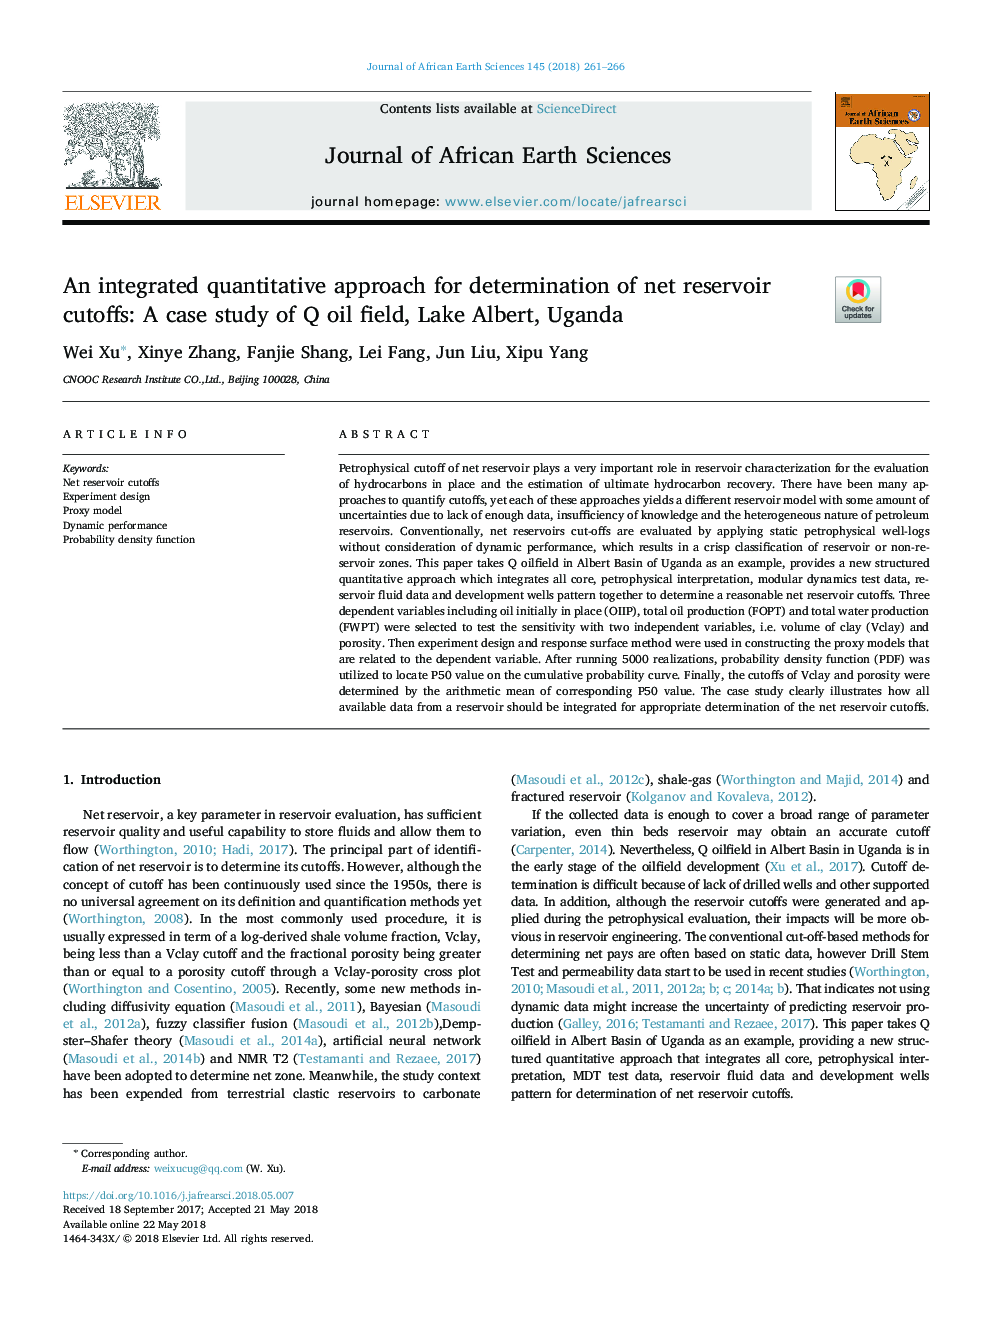 An integrated quantitative approach for determination of net reservoir cutoffs: A case study of Q oil field, Lake Albert, Uganda